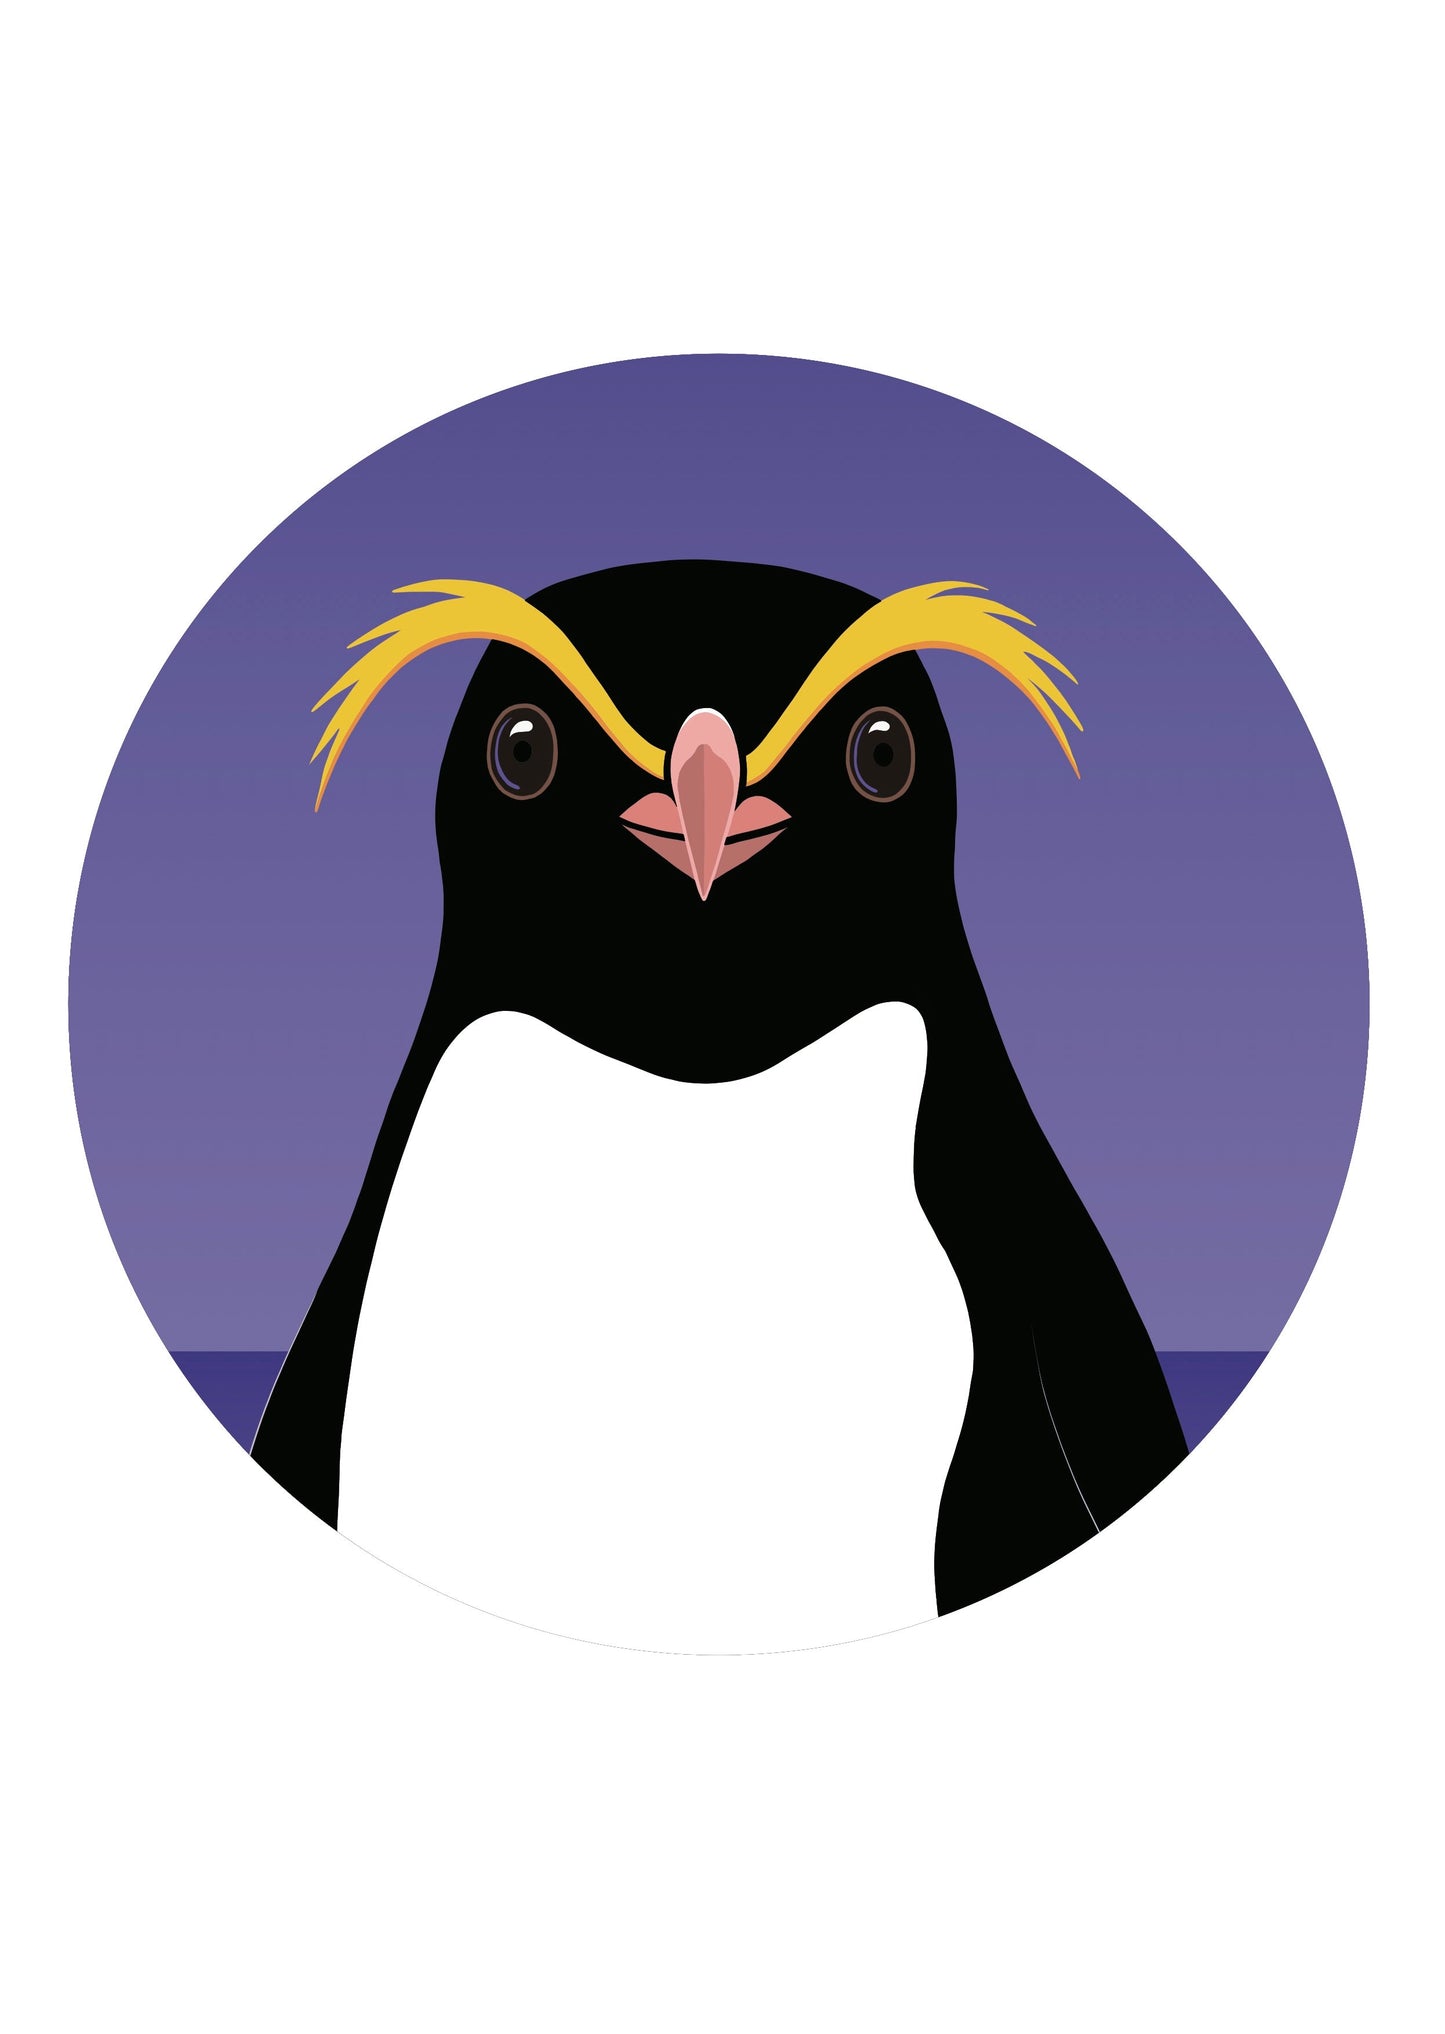 Penguin art spot by New Zealand artist Hansby Design